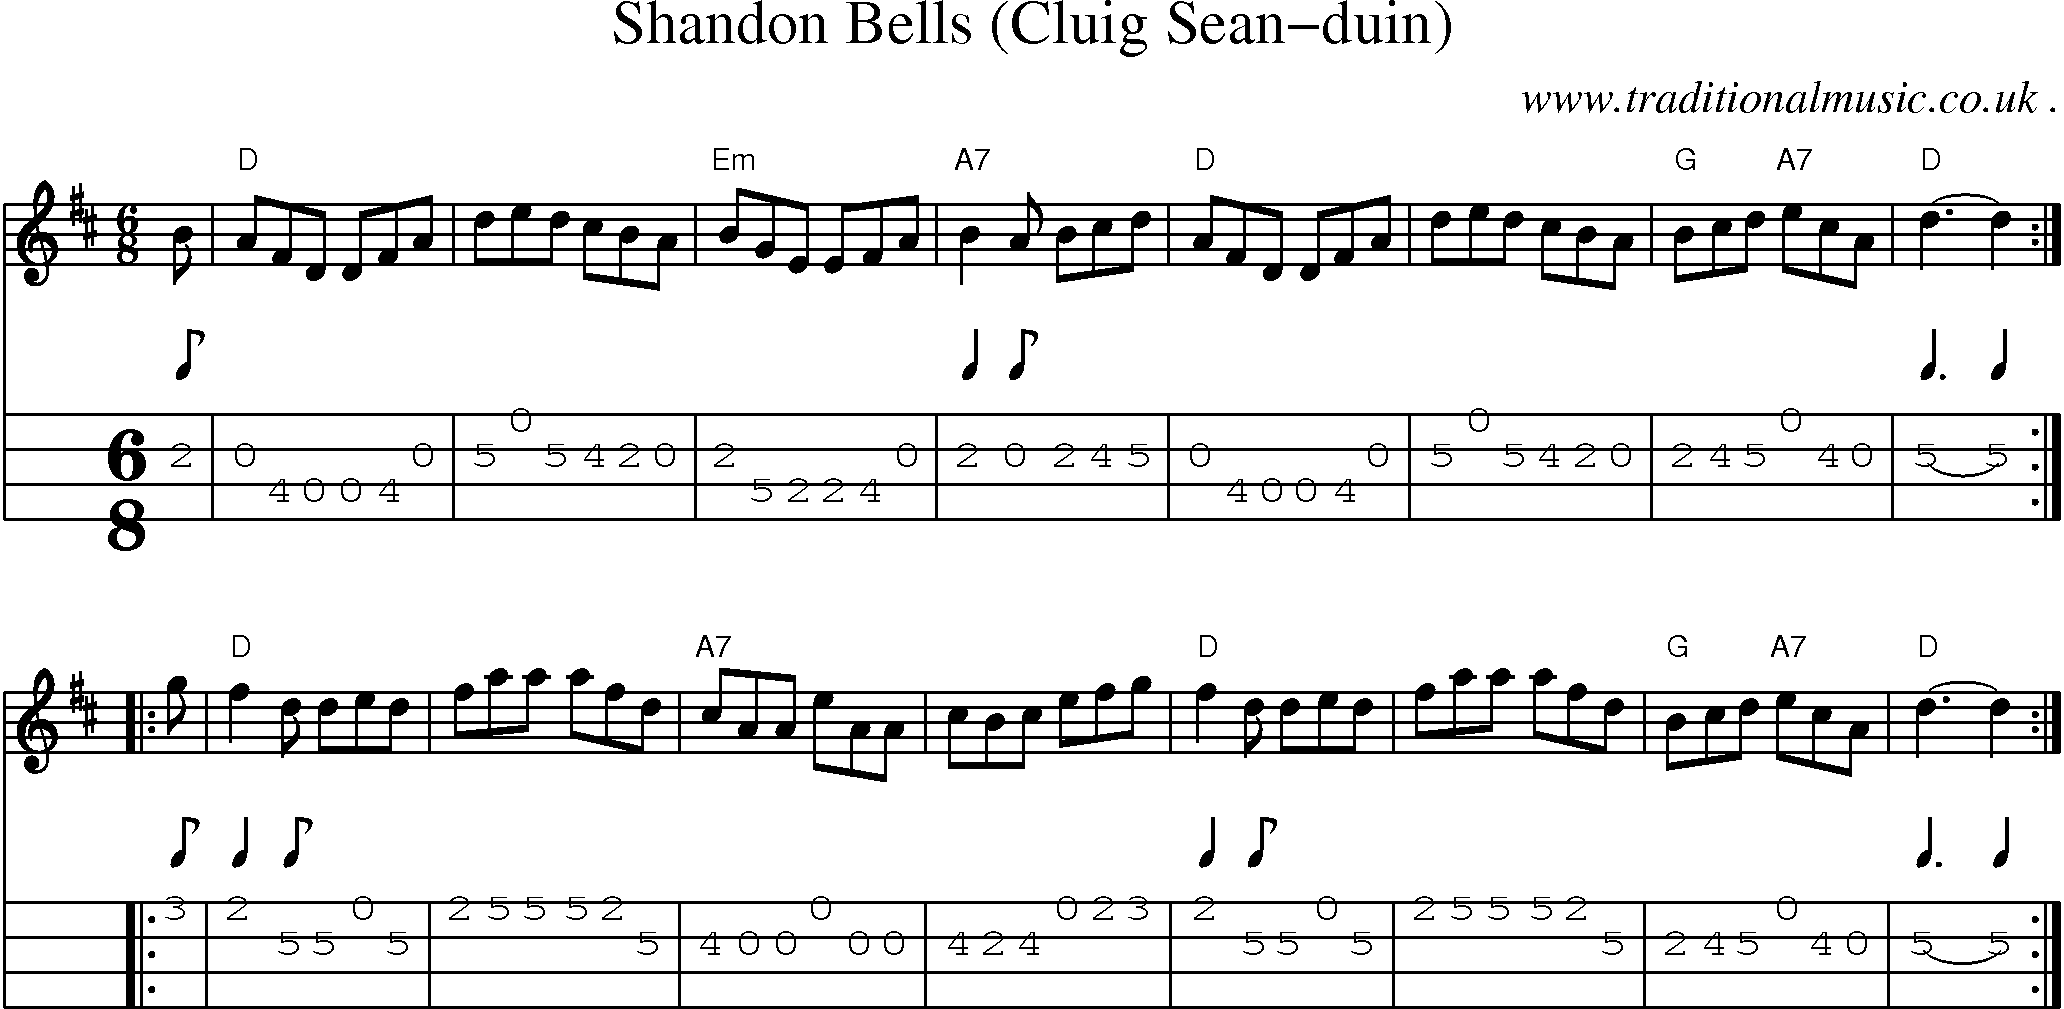 Sheet-music  score, Chords and Mandolin Tabs for Shandon Bells Cluig Sean-duin